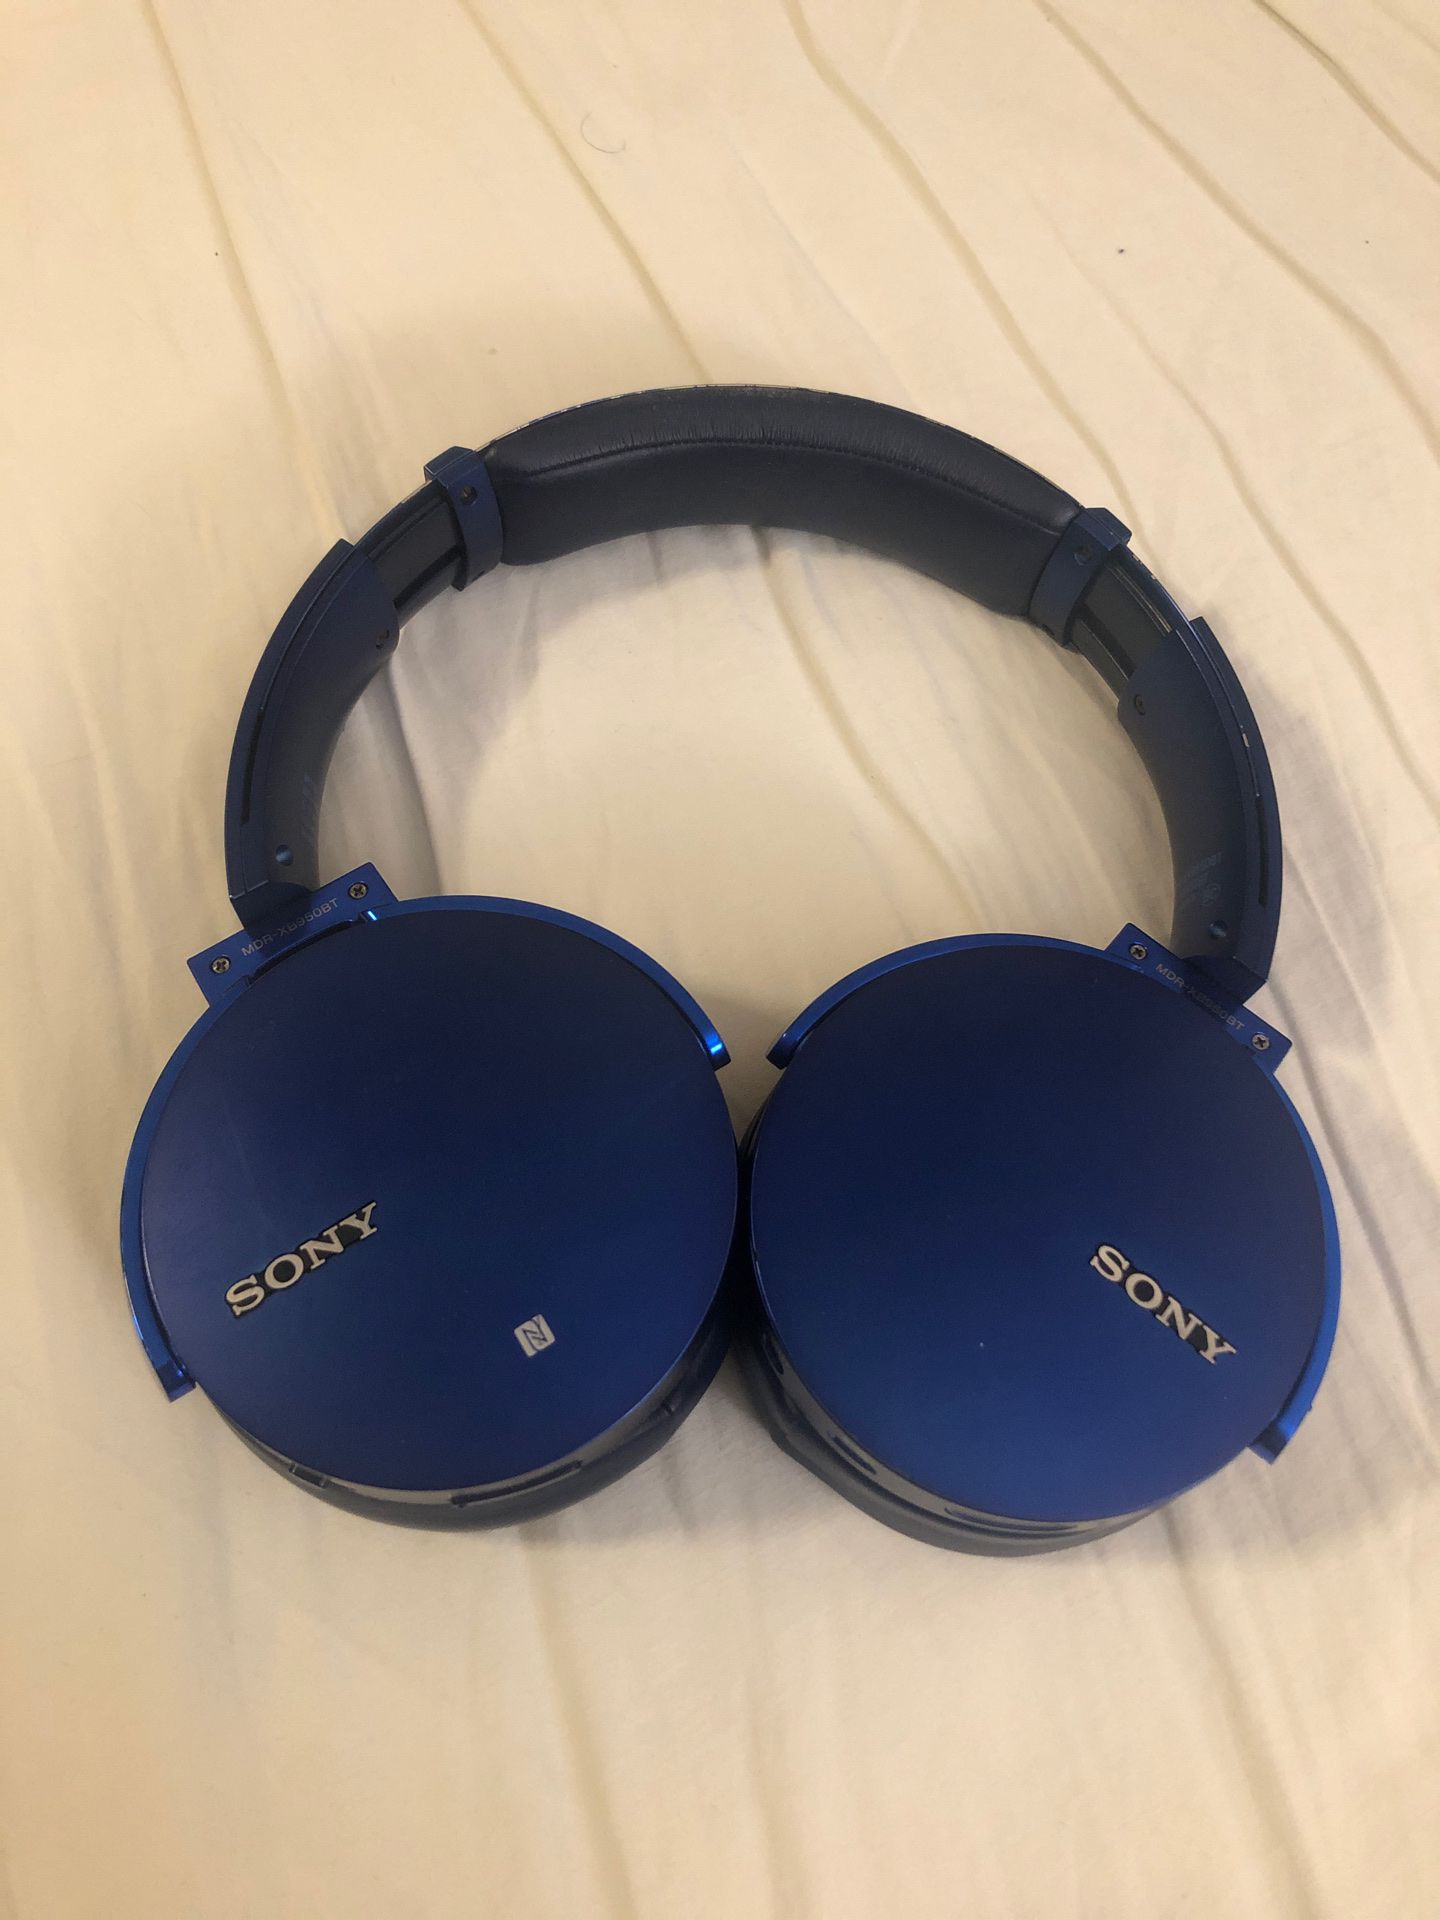 Sony MDR Headphones